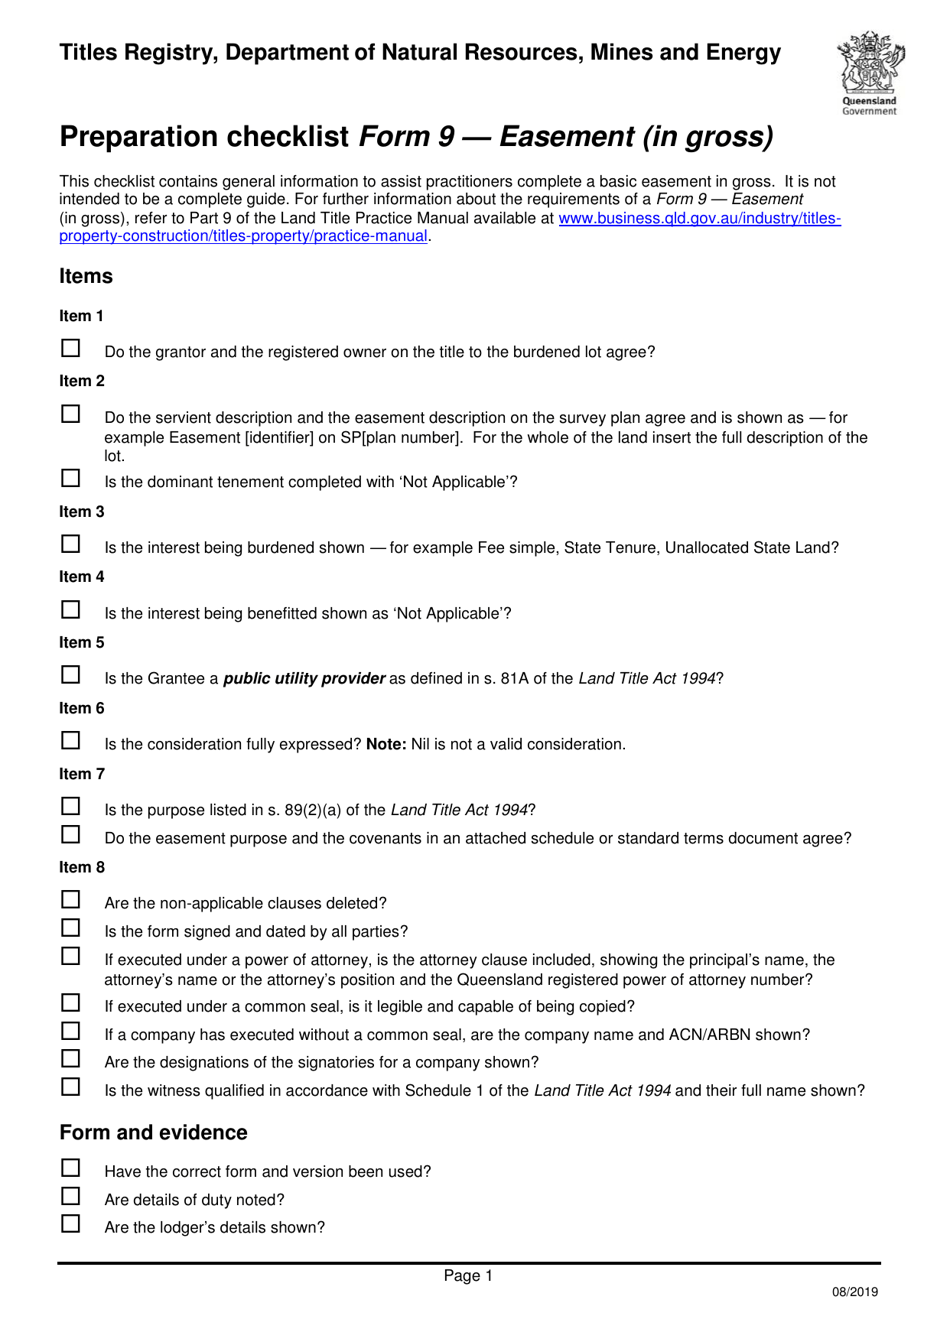 Form 9 Preparation Checklist - Easement (In Gross) - Queensland, Australia, Page 1